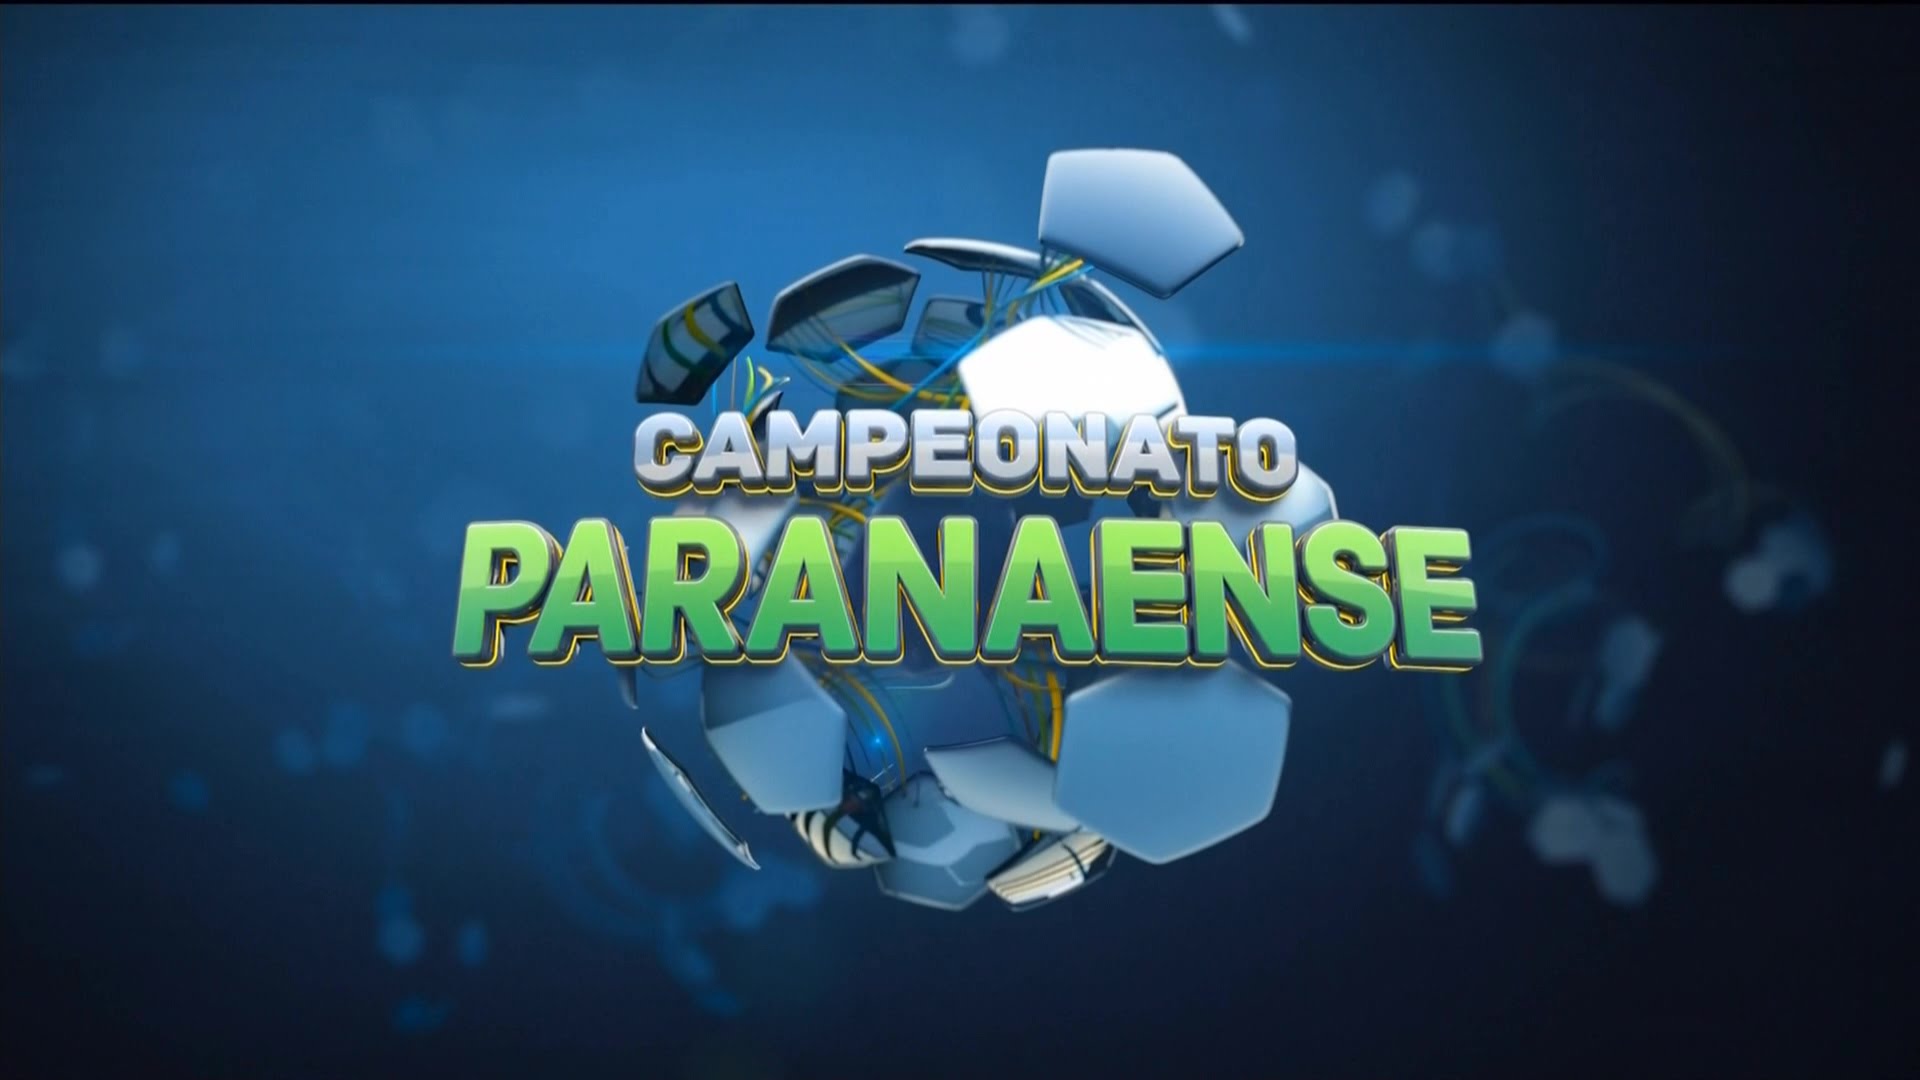 Campeonato Paranaense 2016